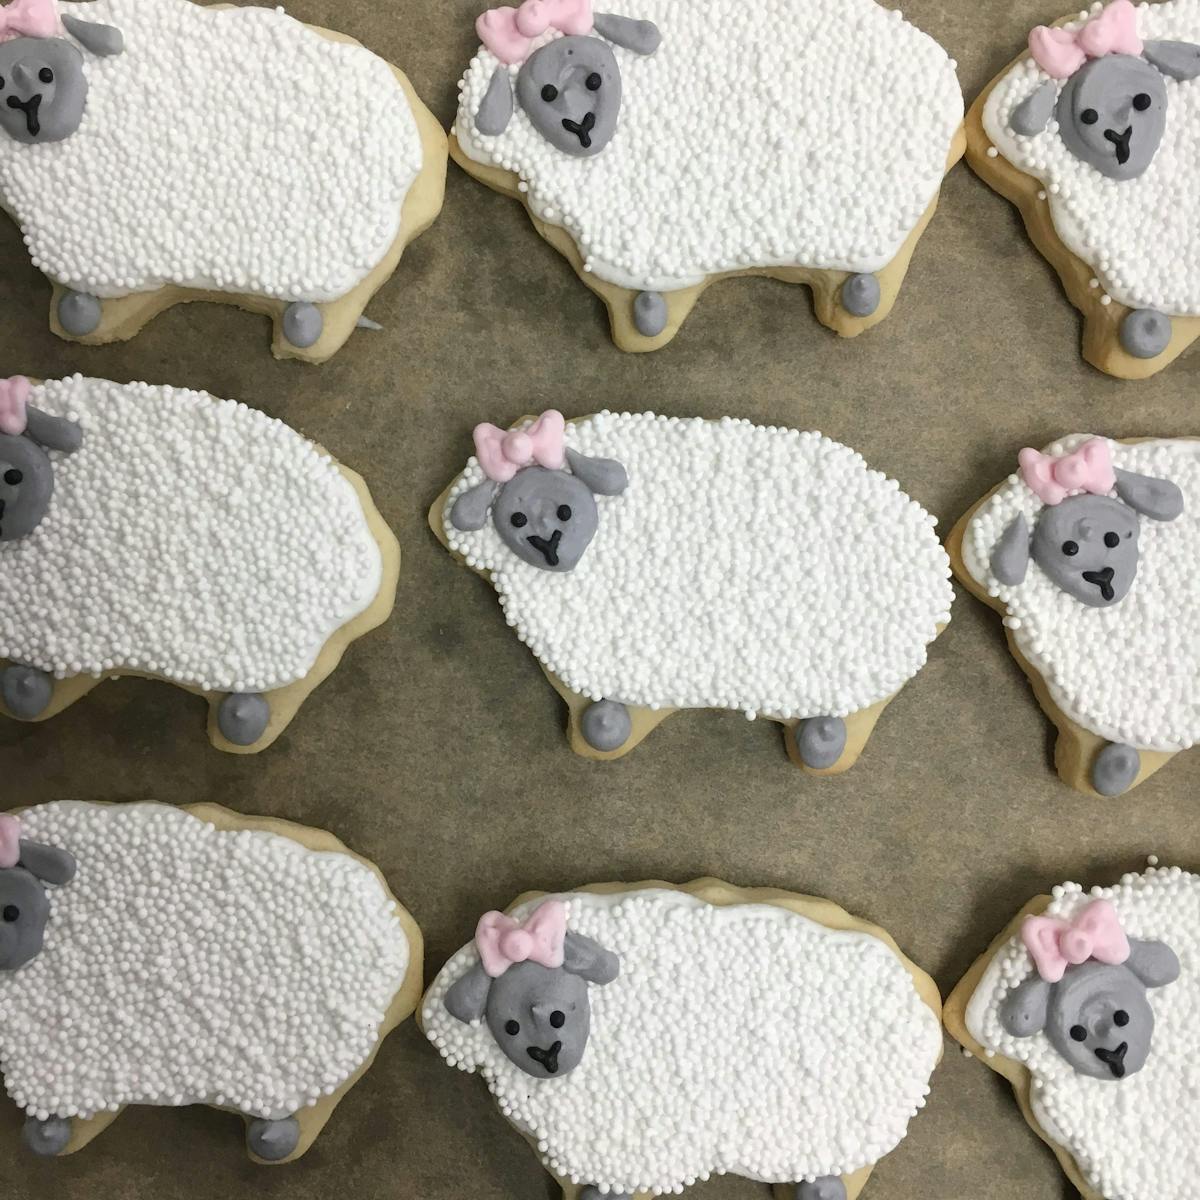 sheep-shaped cookies